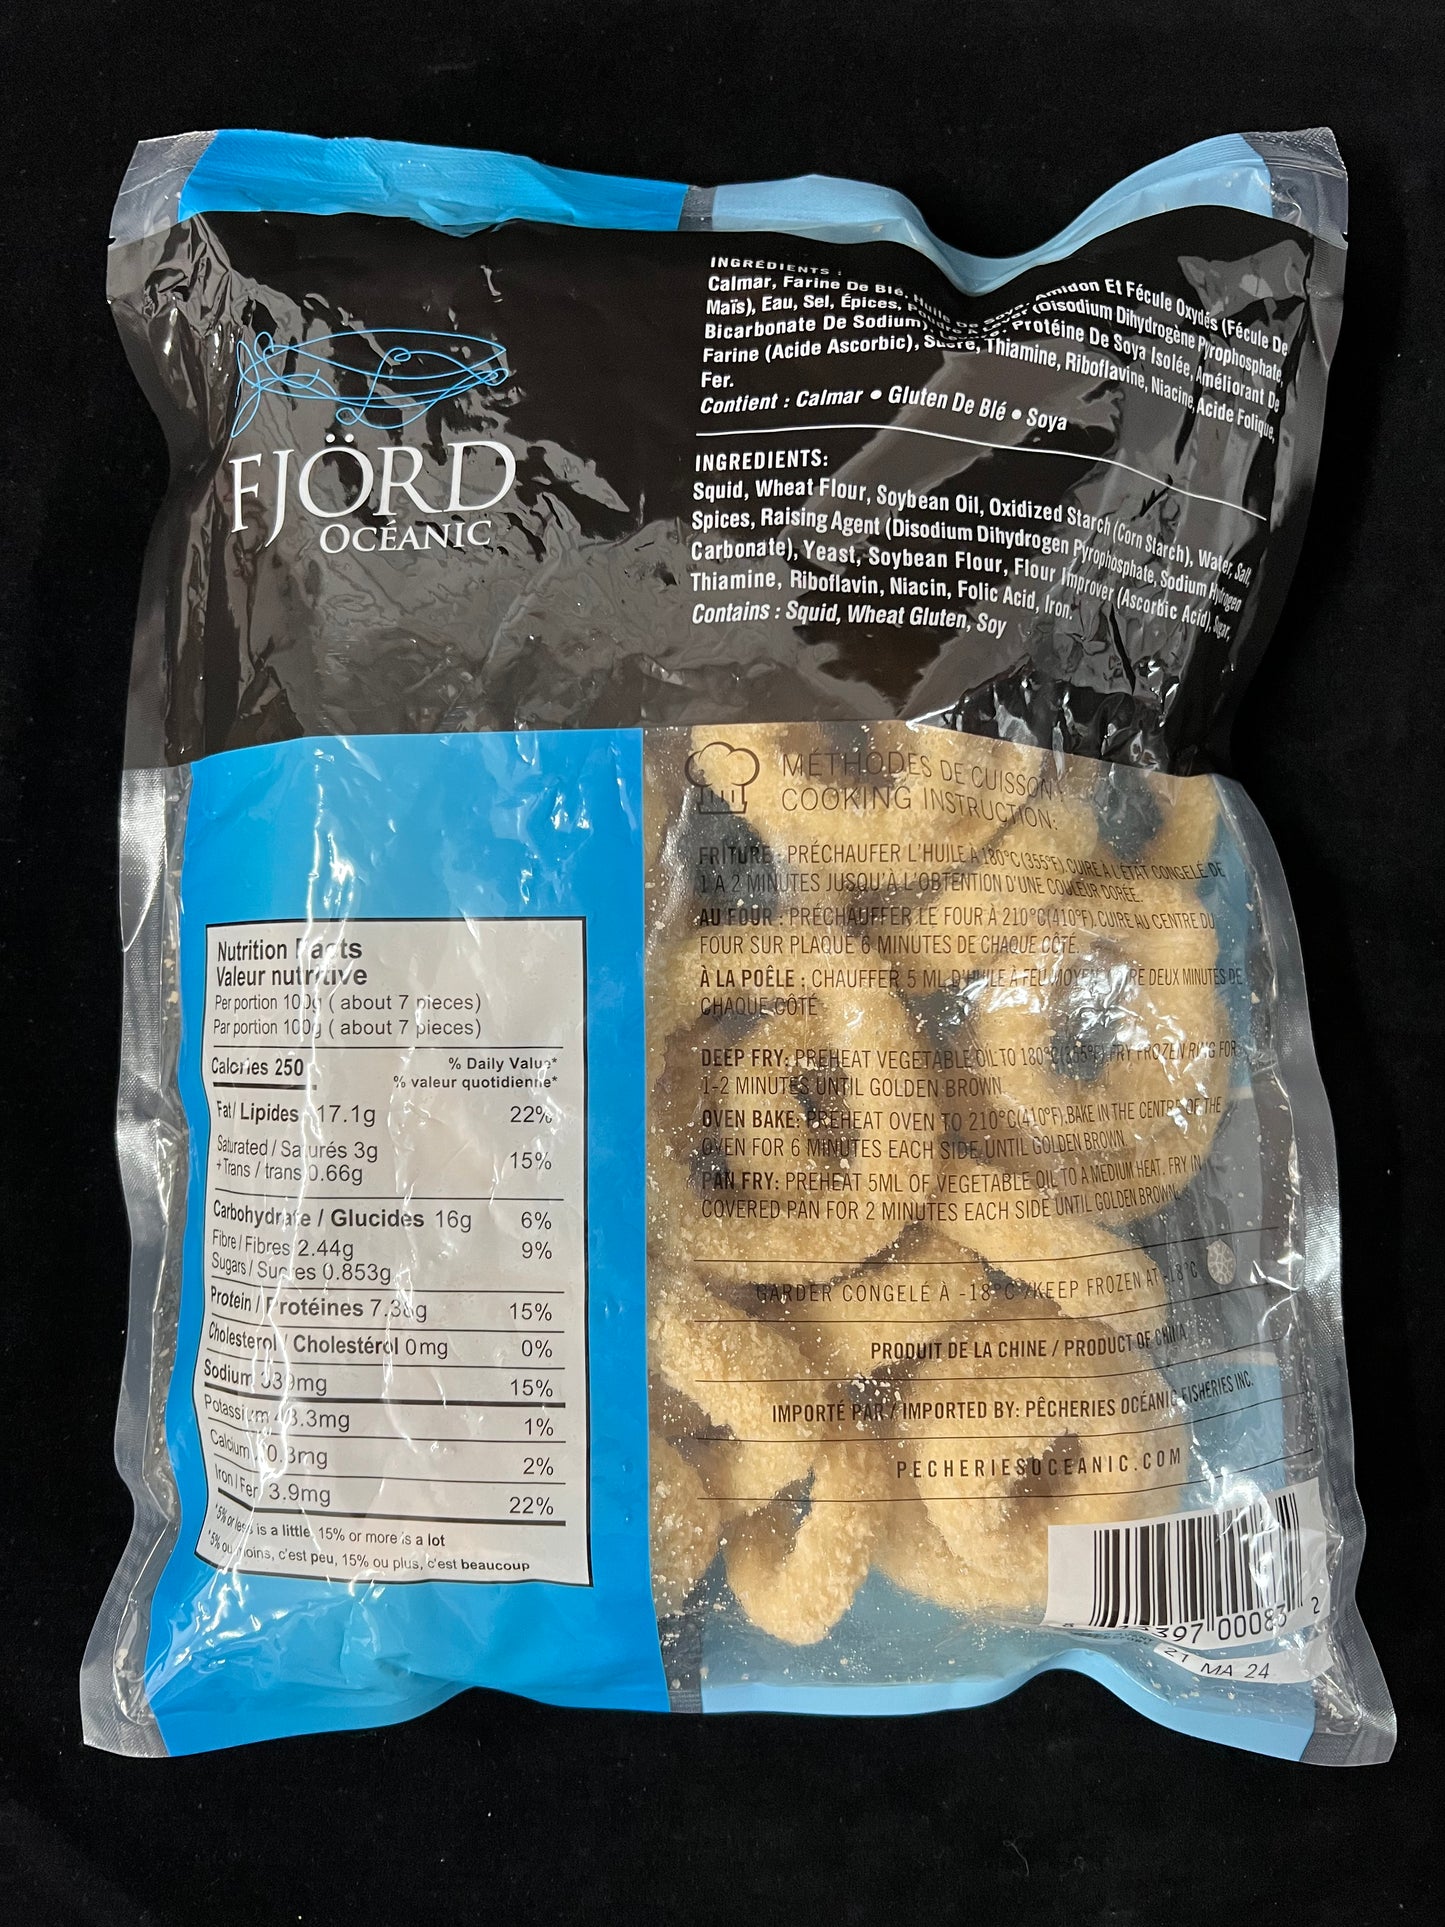 Rondelles de calmar panées / Breaded Squid Rings - 908g